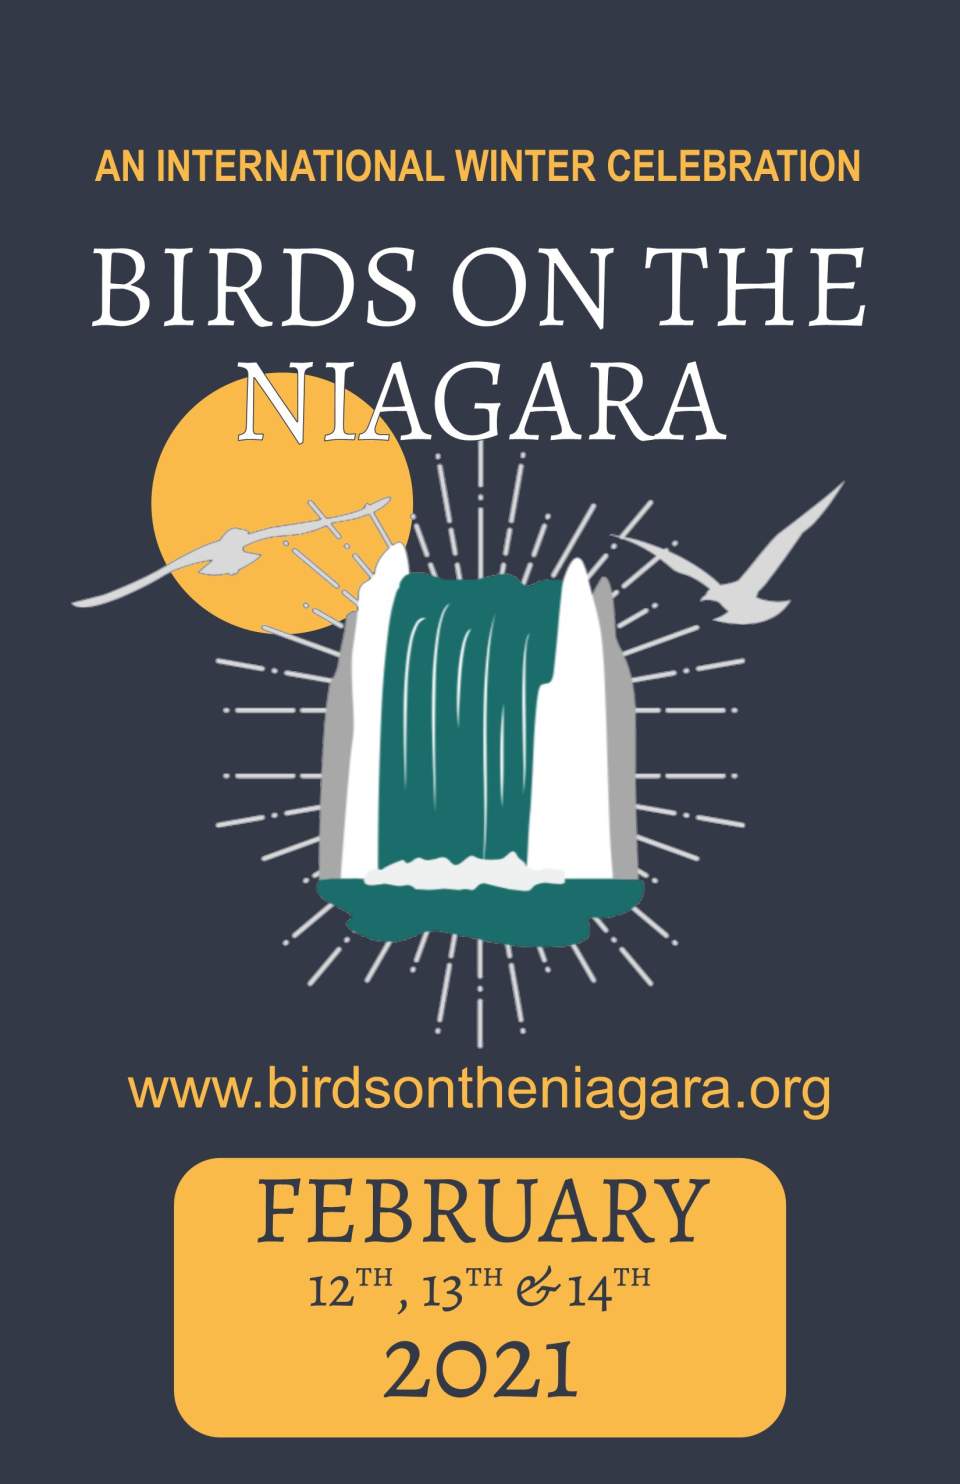 Birds on the Niagara, an International Celebration of Winter Birds